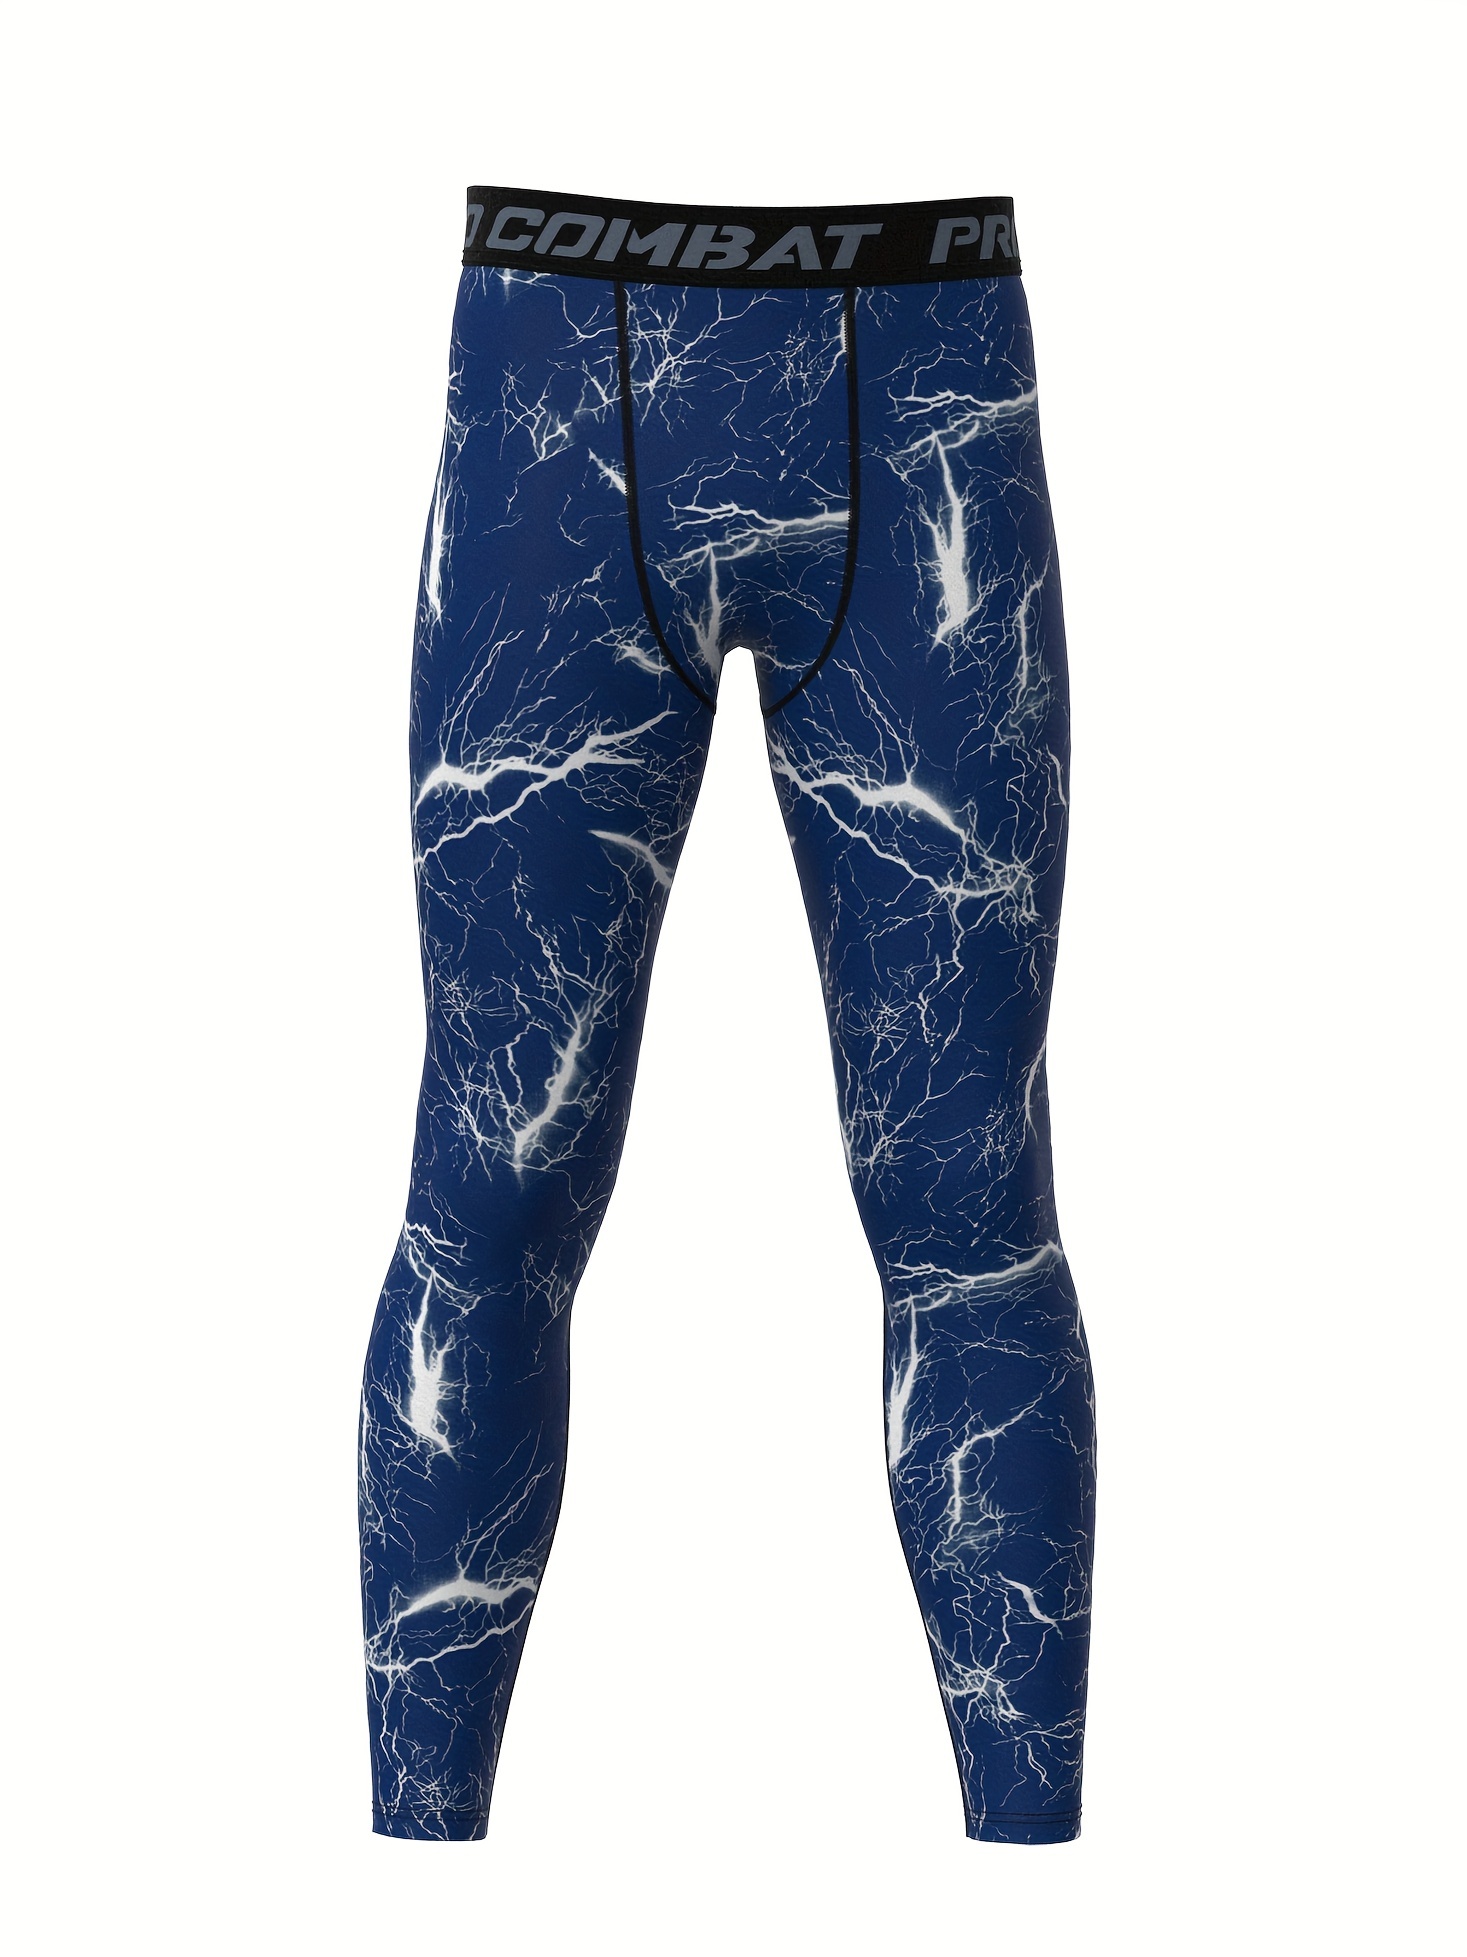 Nike Pro Combat Hyperwarm Max Compression Pant Legging Blue Size L 